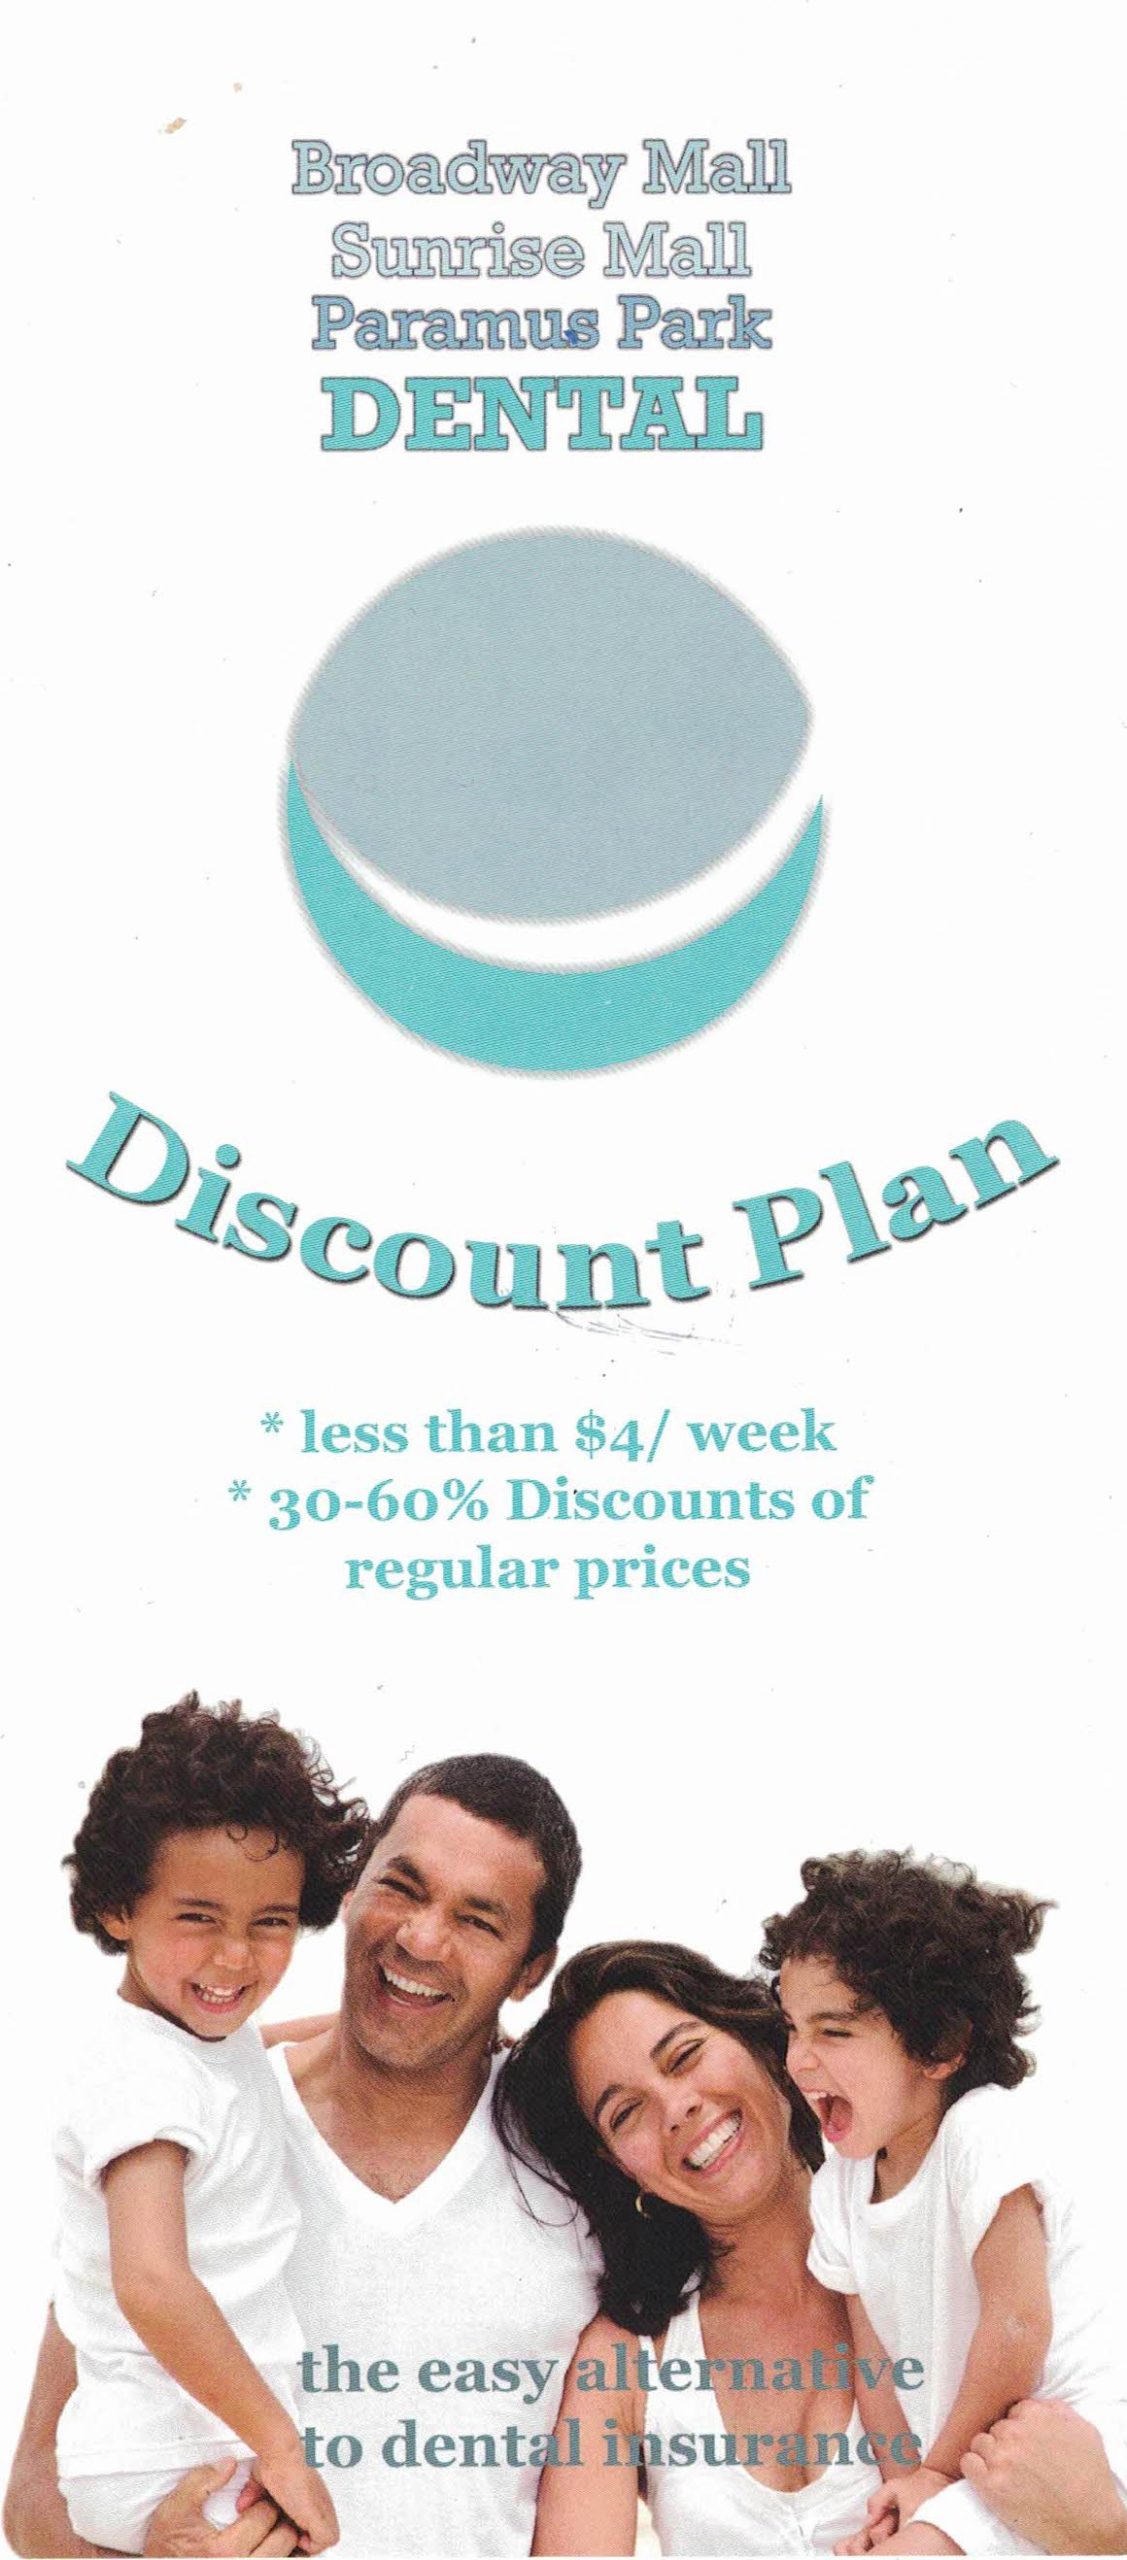 Discount Plan at Paramus Park Mall Dental